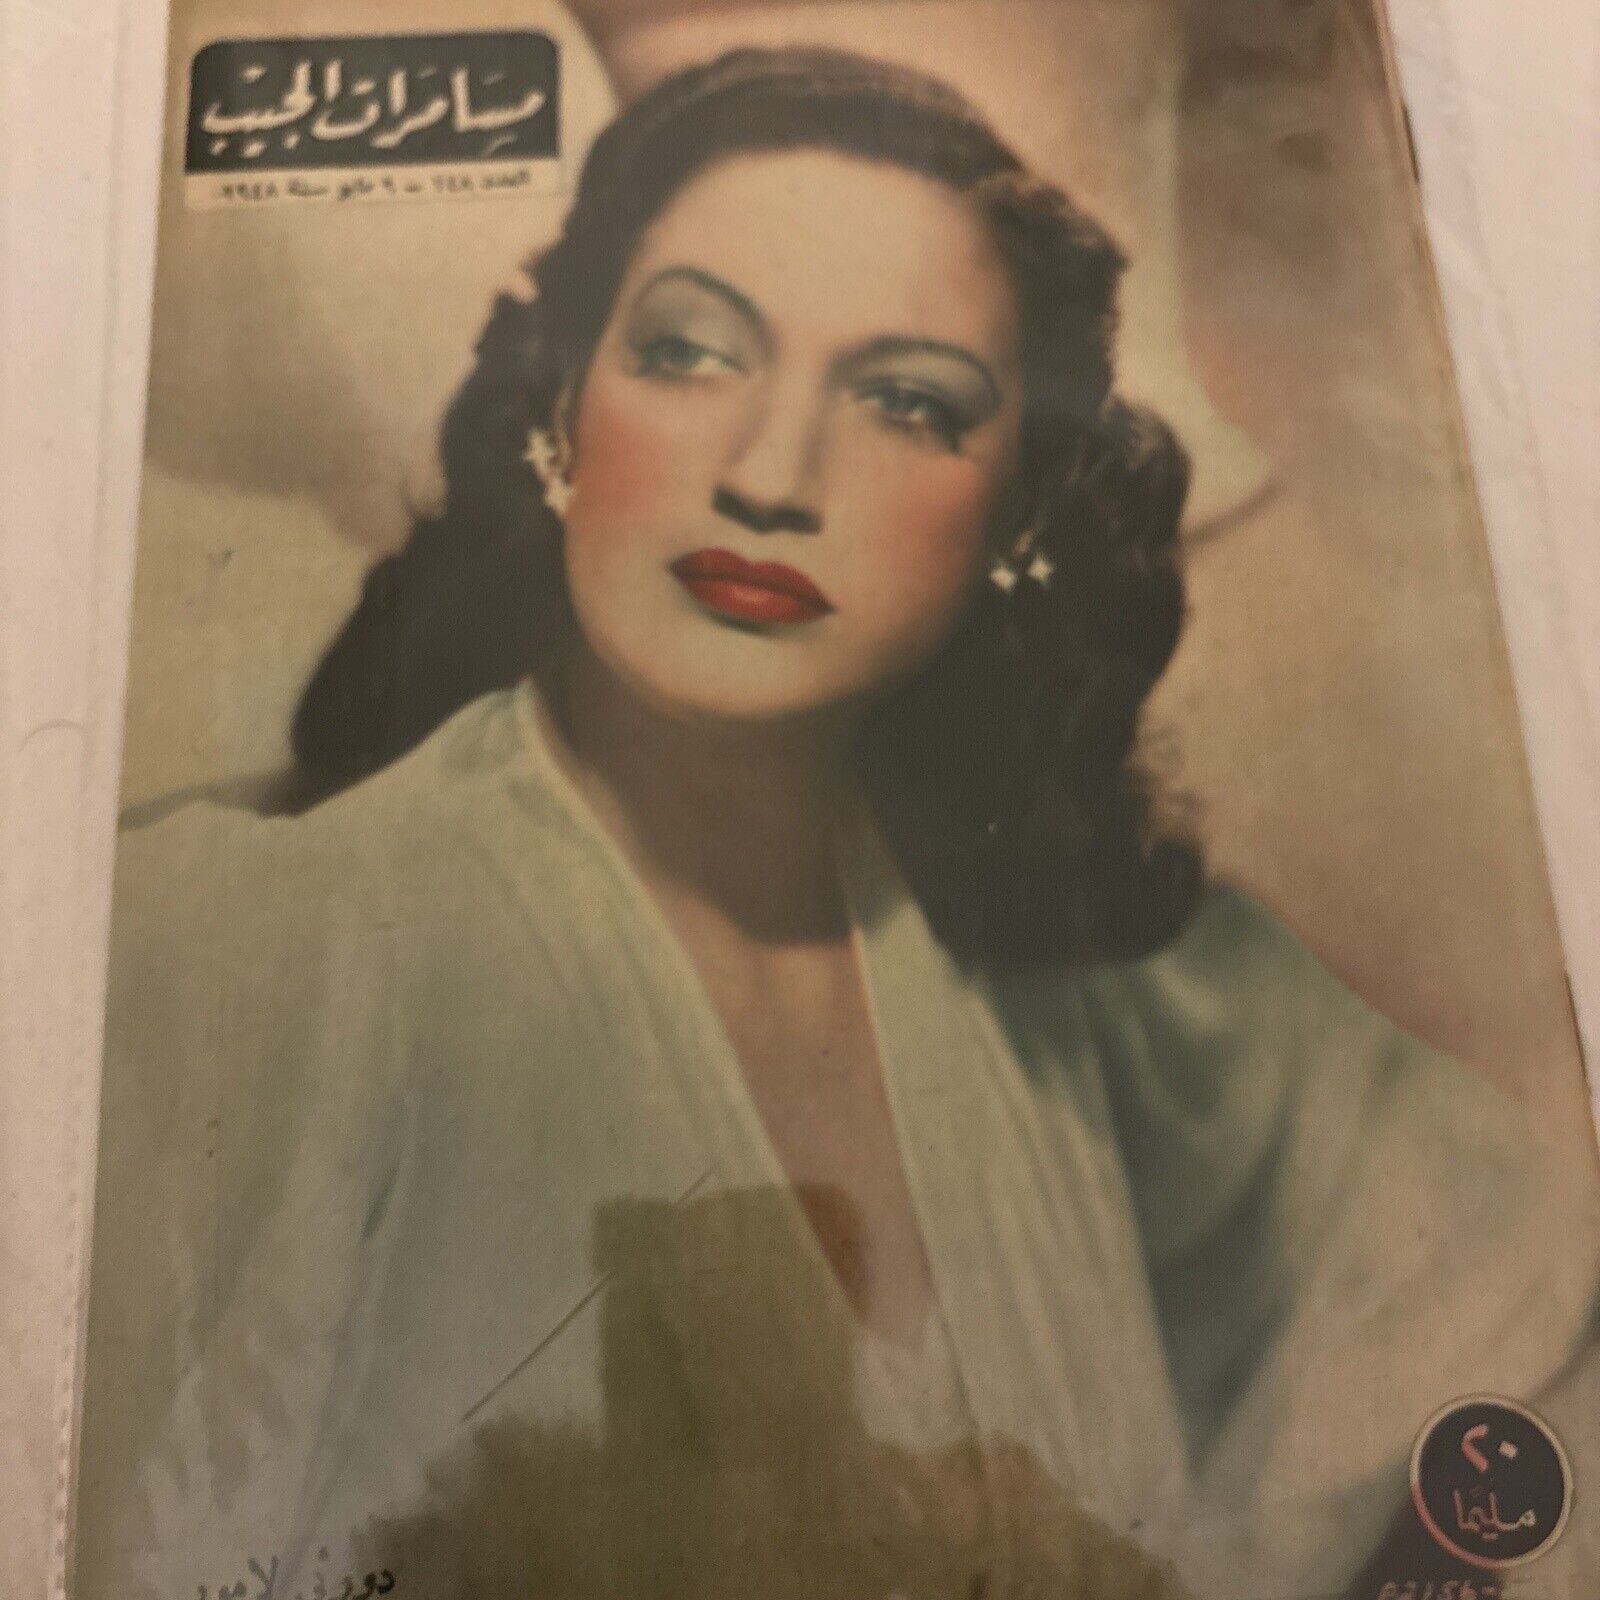 1948 Arabic Magazine Actress Dorothy Lamour  Cover Scarce Hollywood